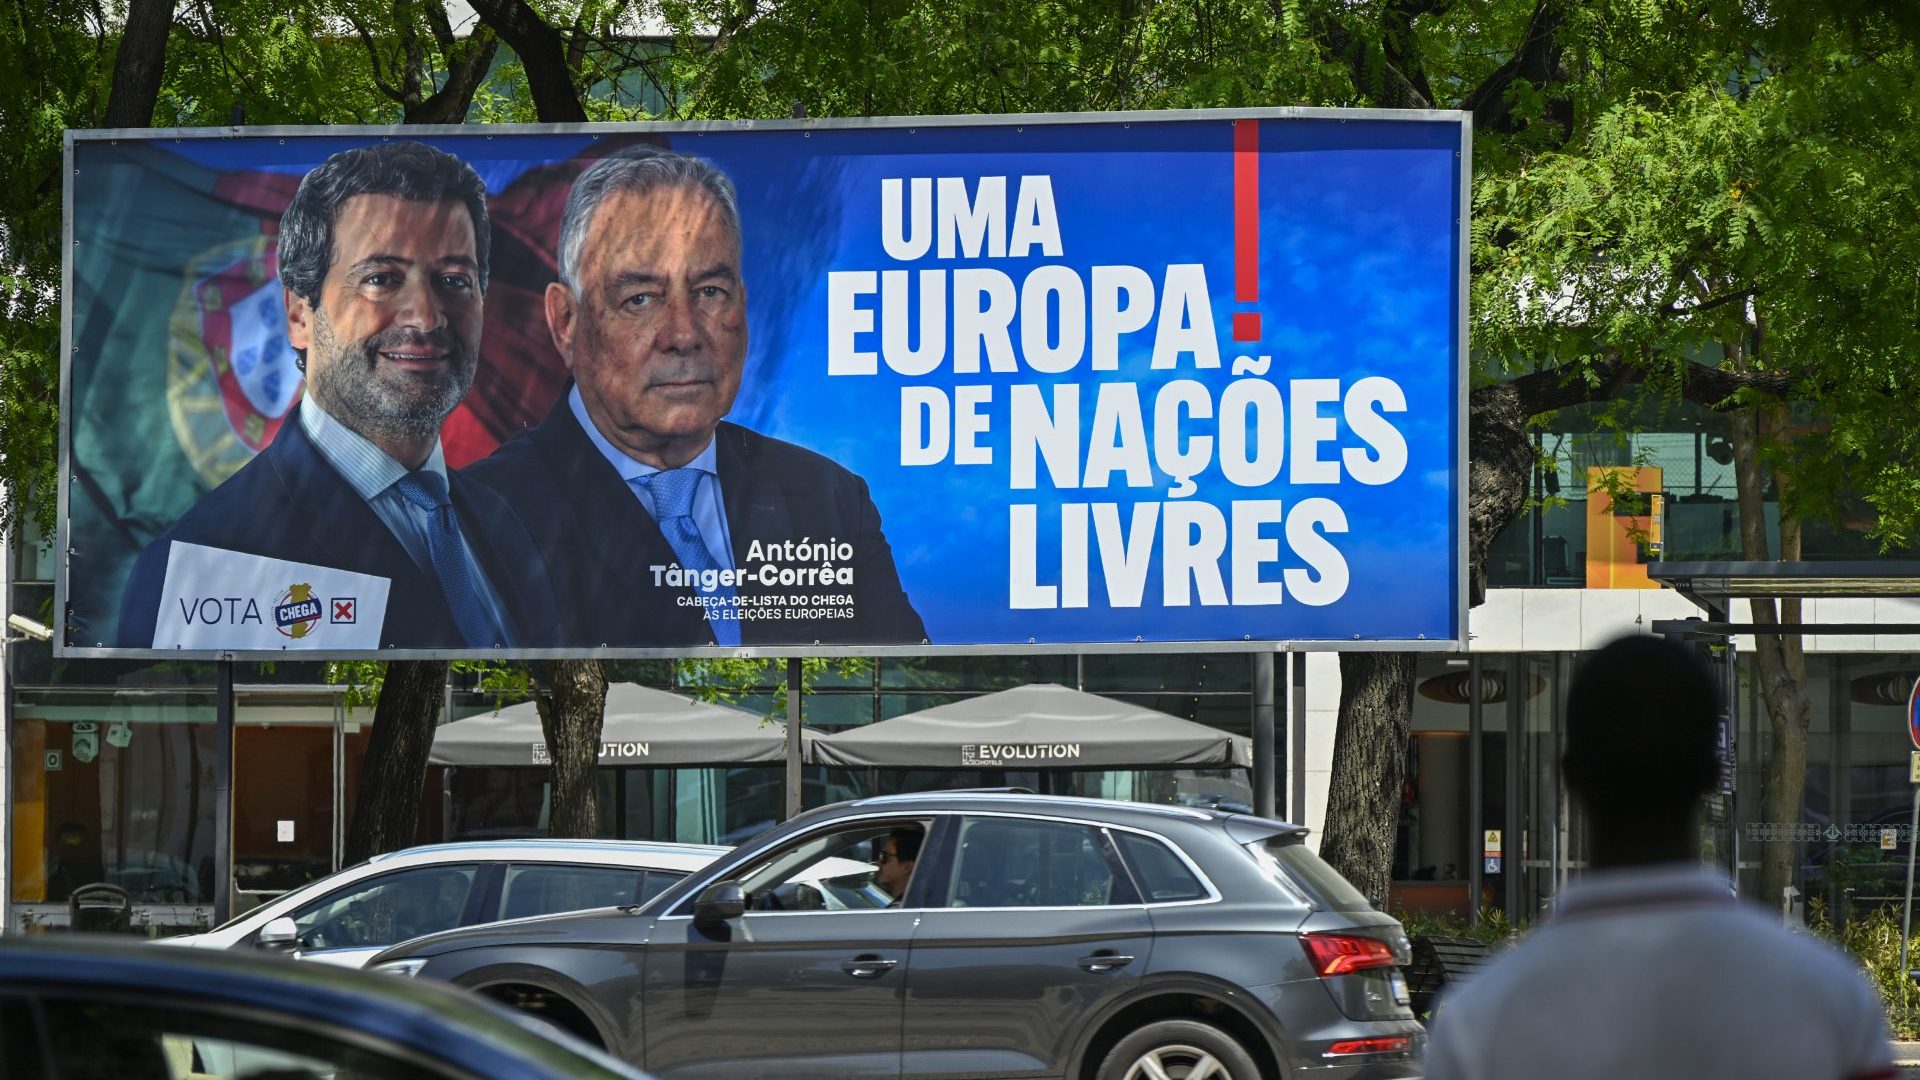  Far-right political party Chega large billboard advertises António Tânger Corrêa for European Parliament. Photo: Horacio Villalobos#Corbis/Corbis via Getty Images